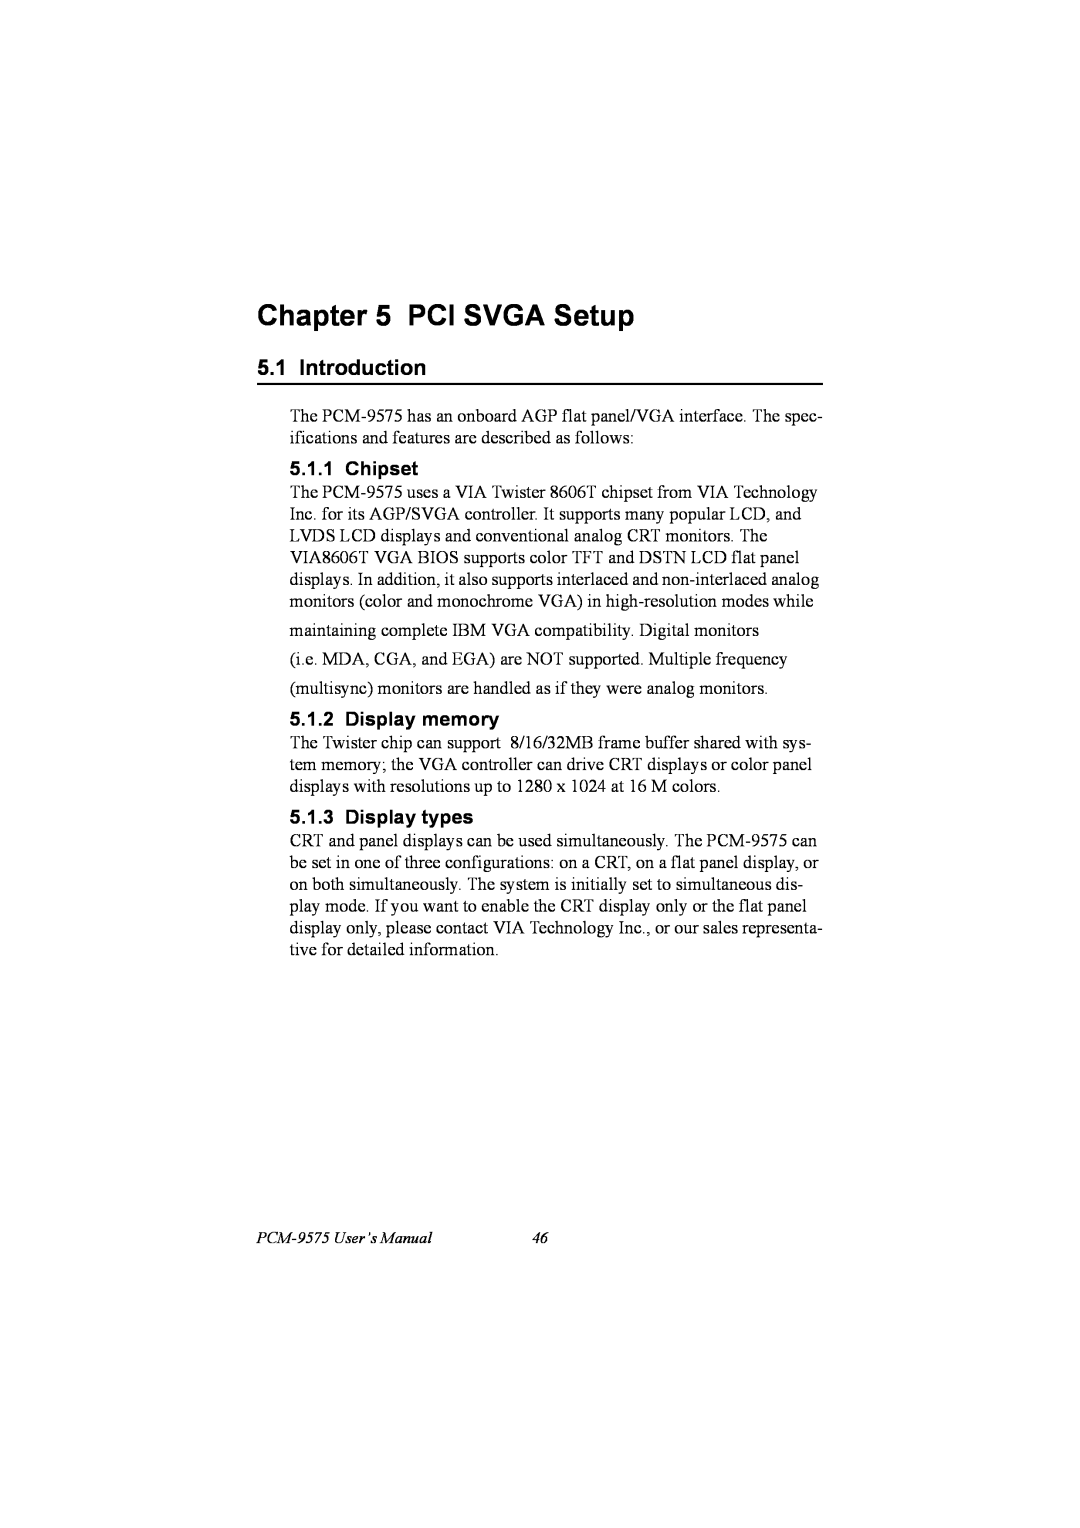 IBM PCM-9575, 100/10 user manual PCI SVGA Setup, Introduction, Chipset, Display memory, Display types 